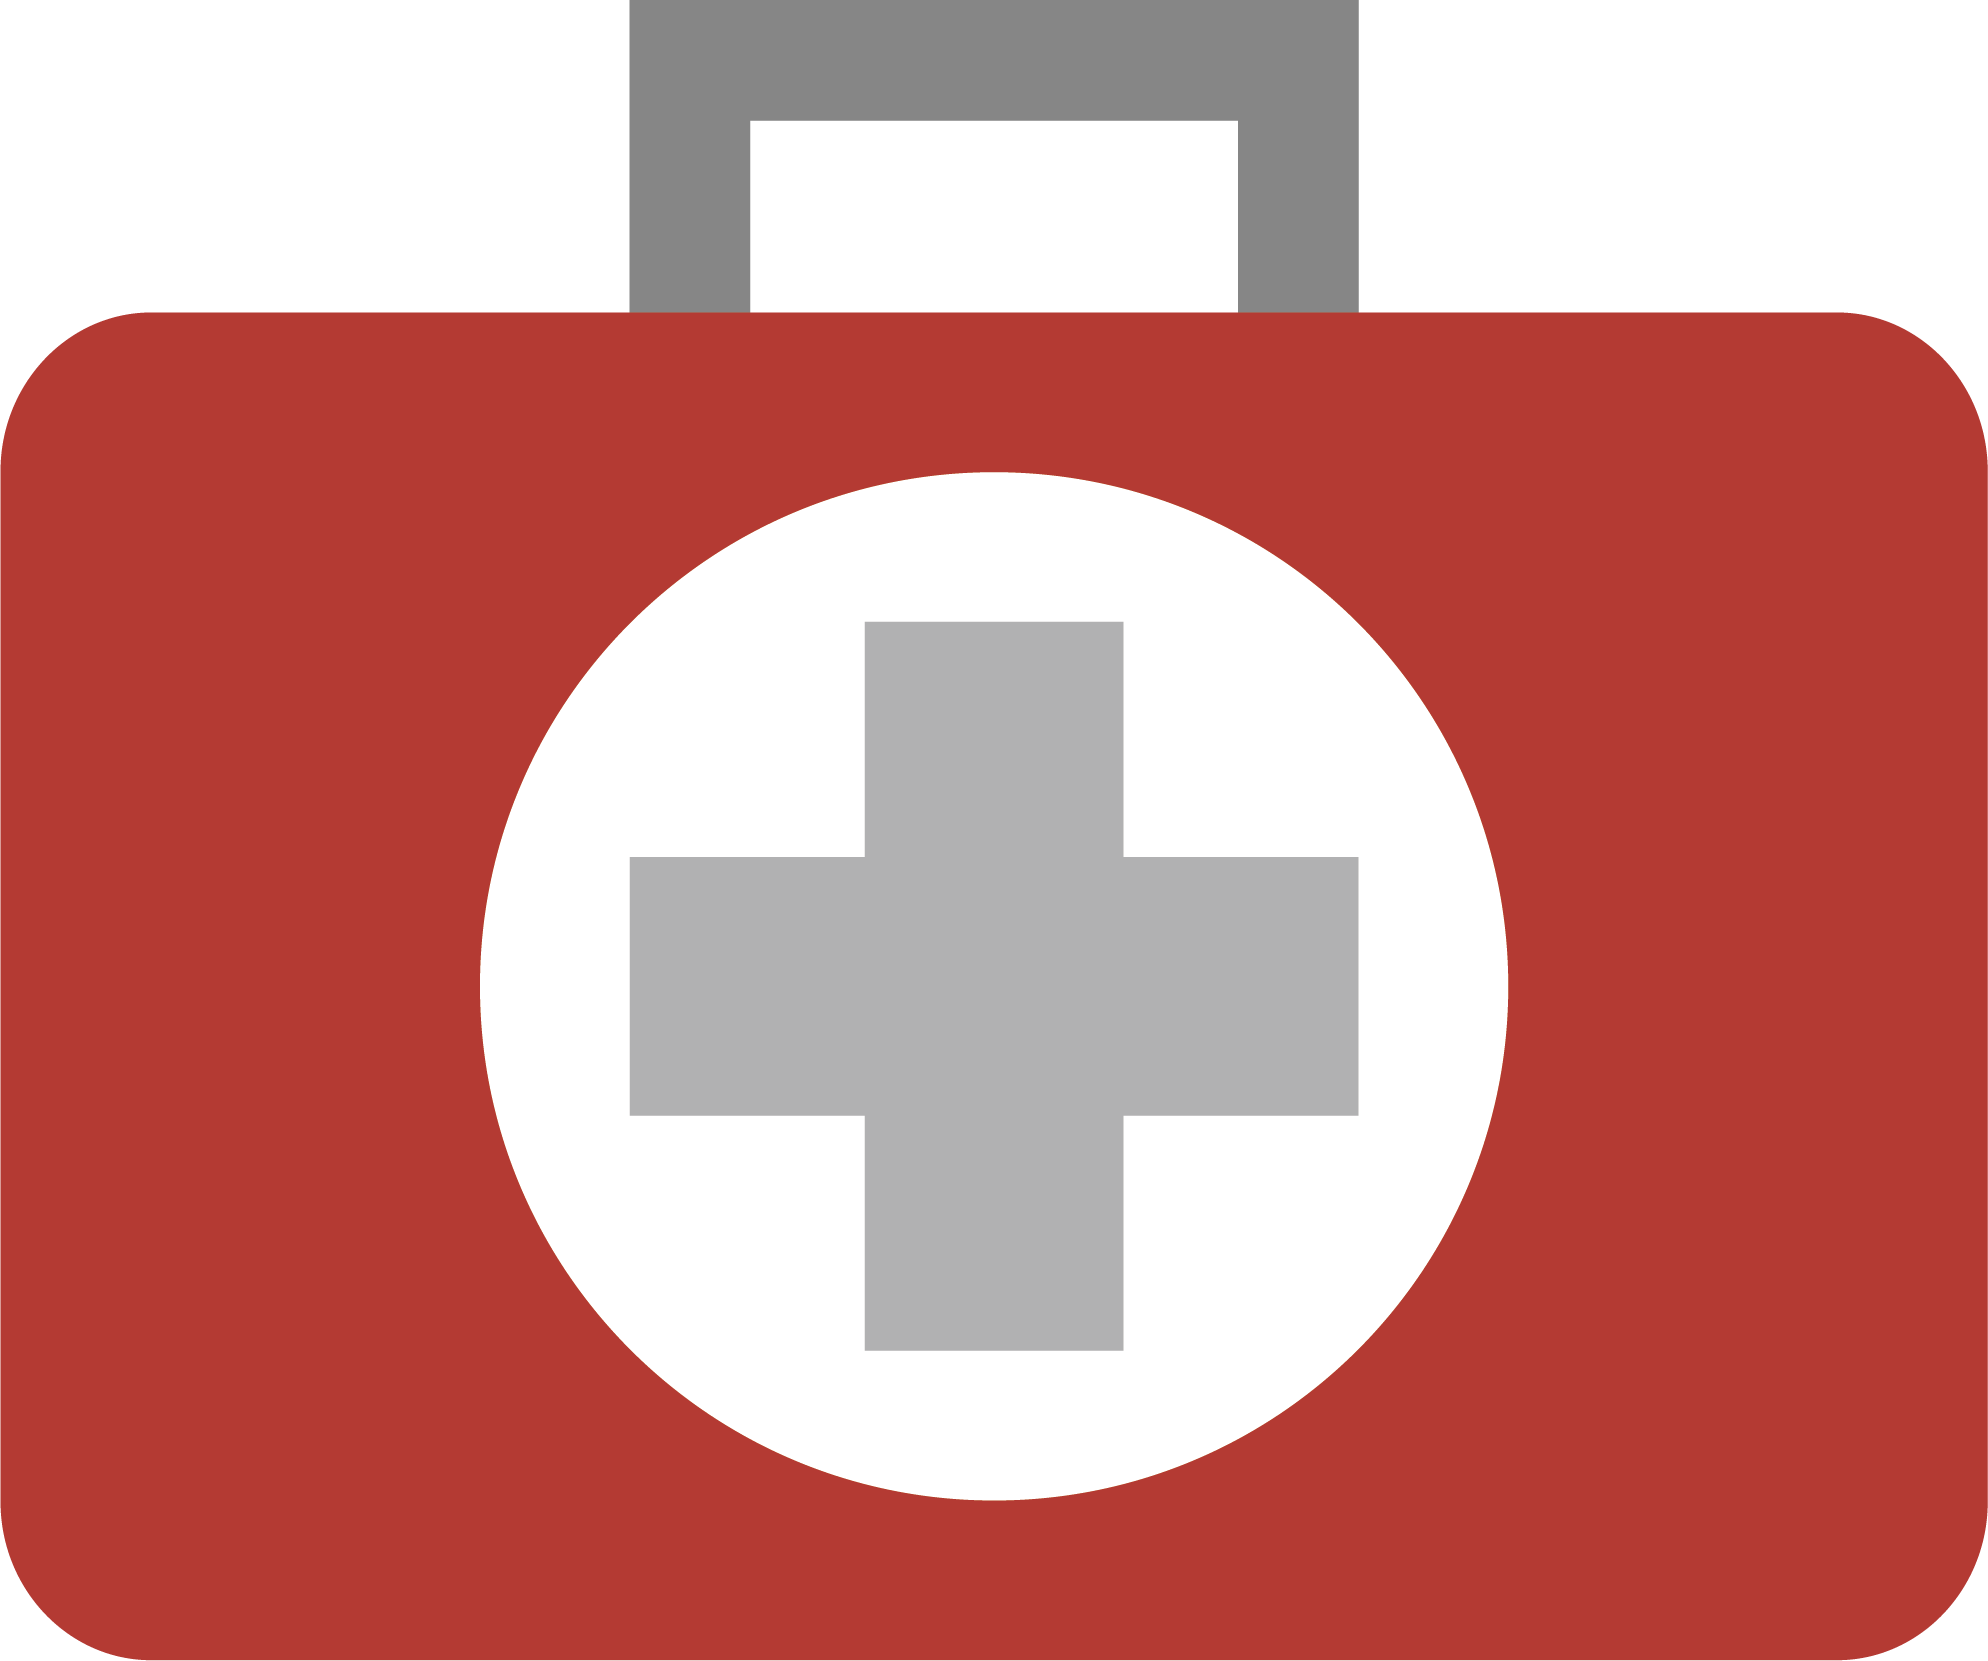 First Aid Kit - First Aid (1988x1661)